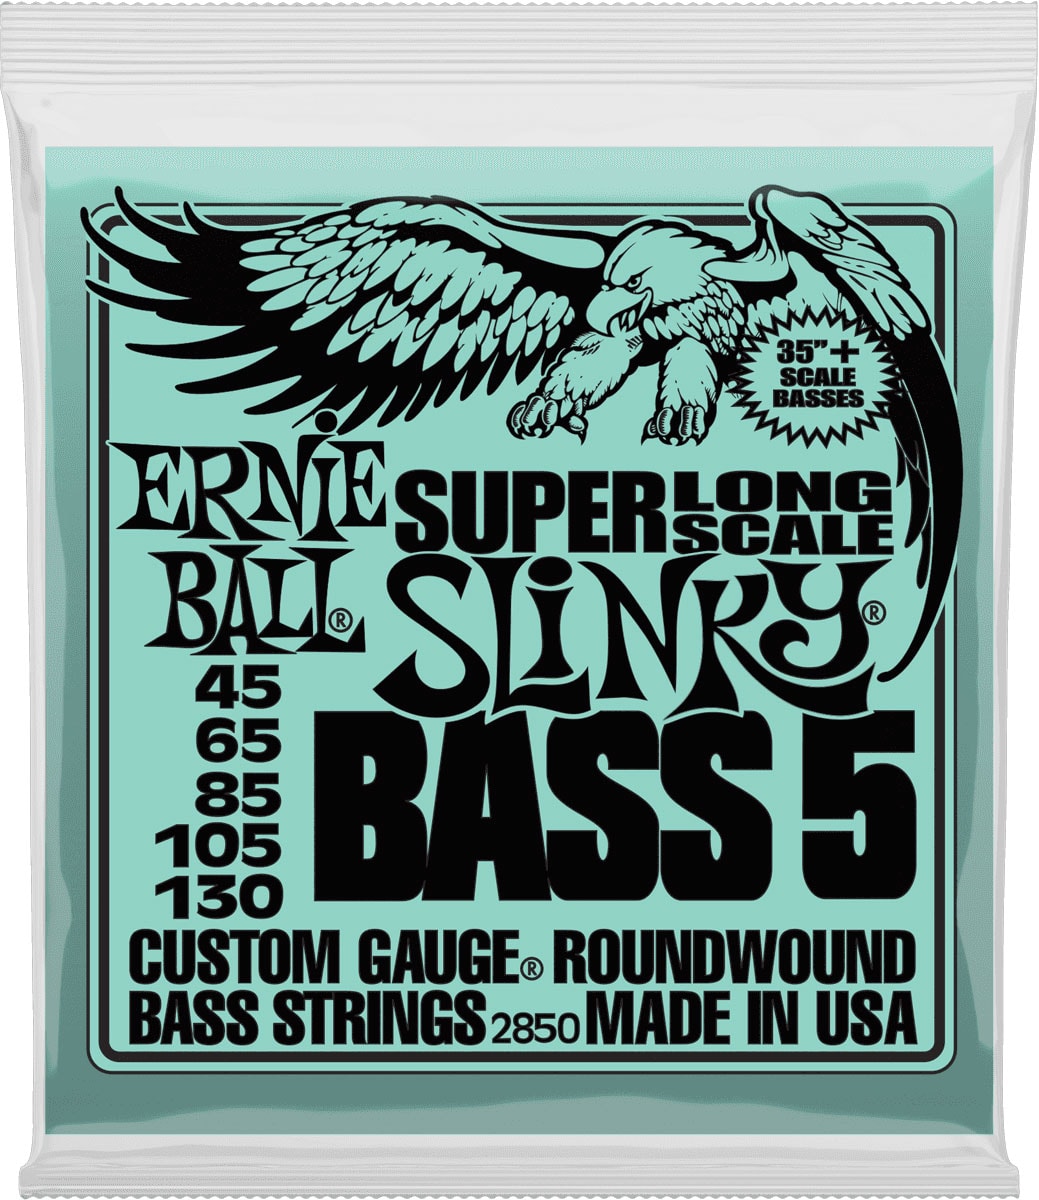 Bass (5) Nanoweb Nickel Plated 45-130 - jeu de 5 cordes Cordes